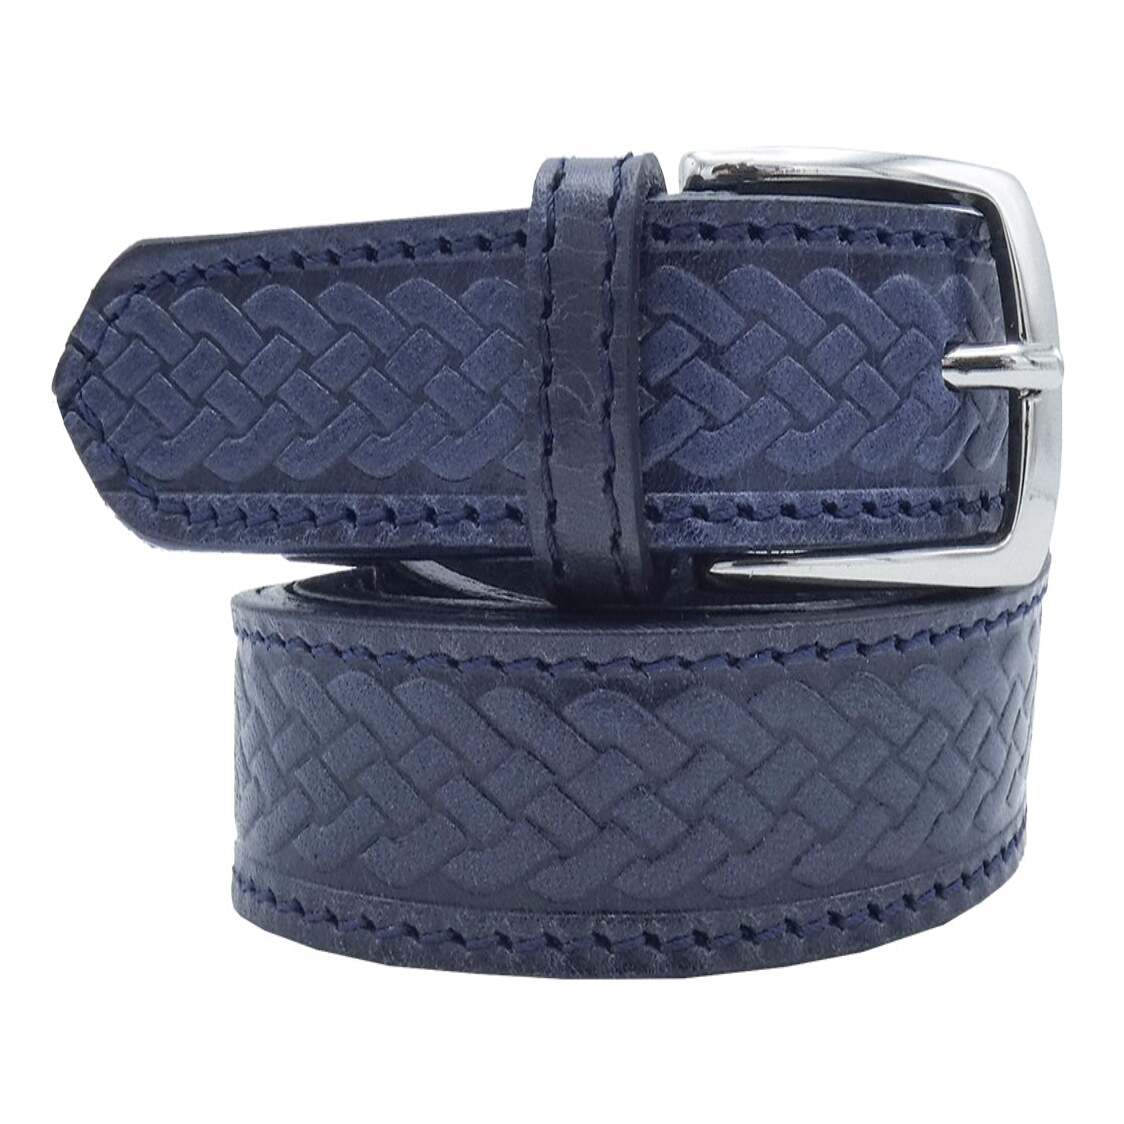 Hand-printed Raffaello leather belt with handcrafted satin zamak buckle